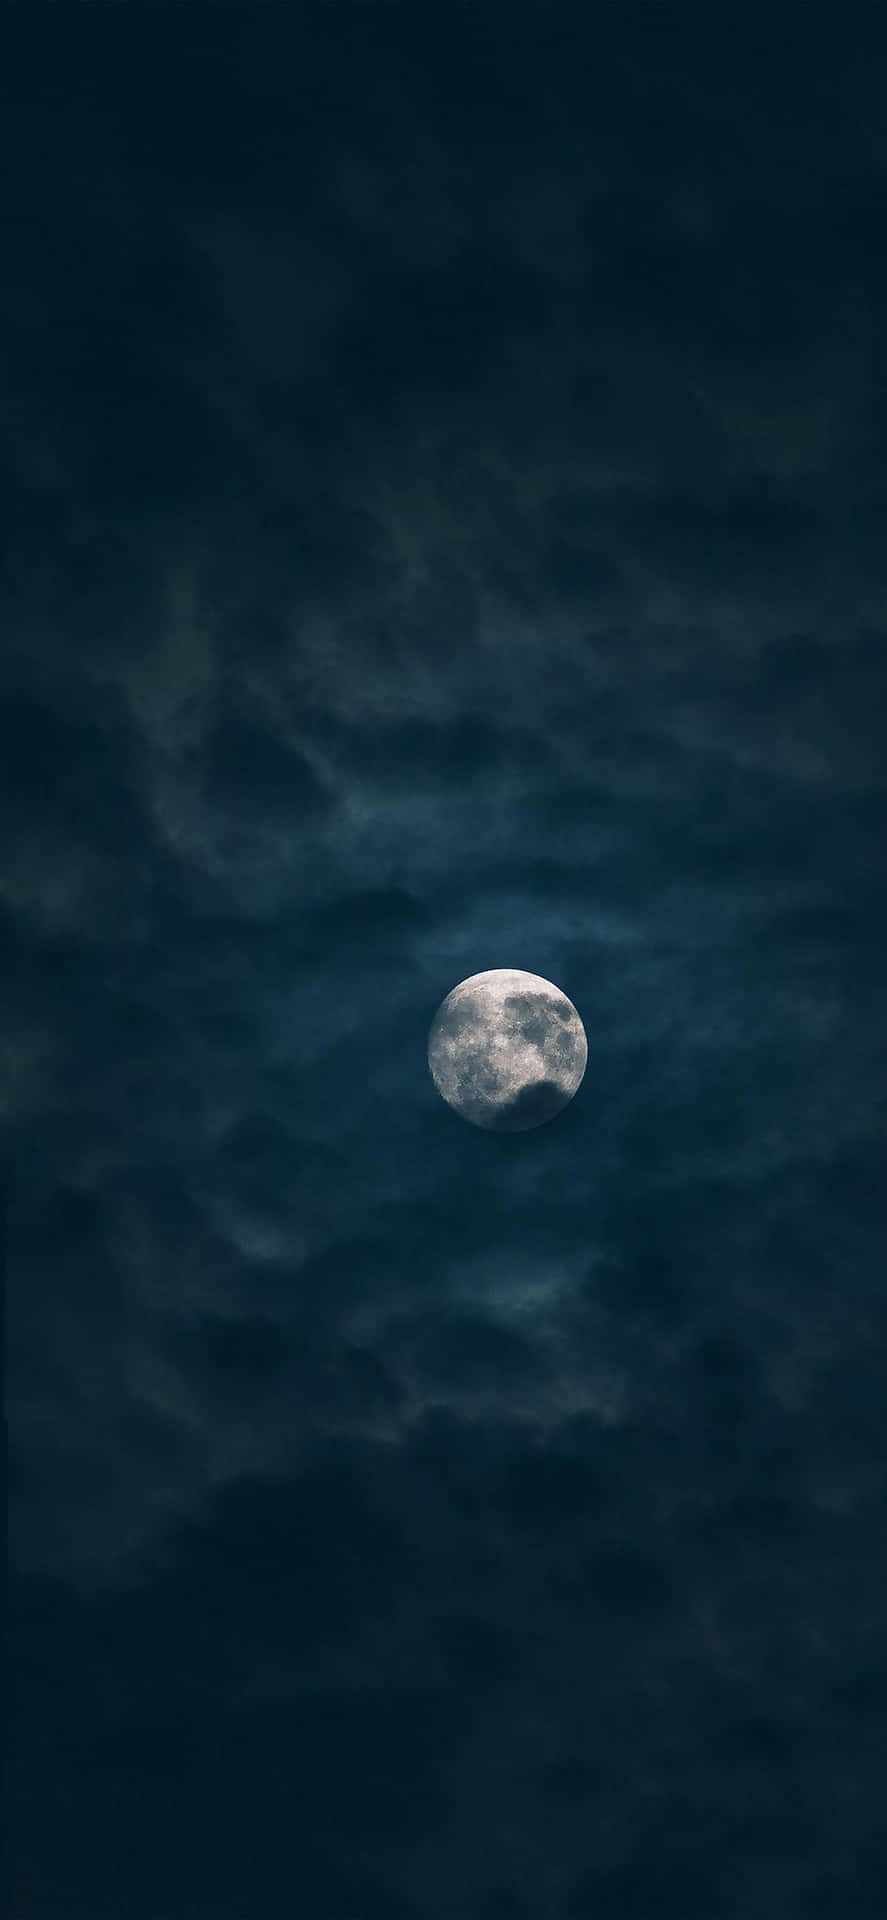 The Moon Dark Clouds iPhone Wallpaper